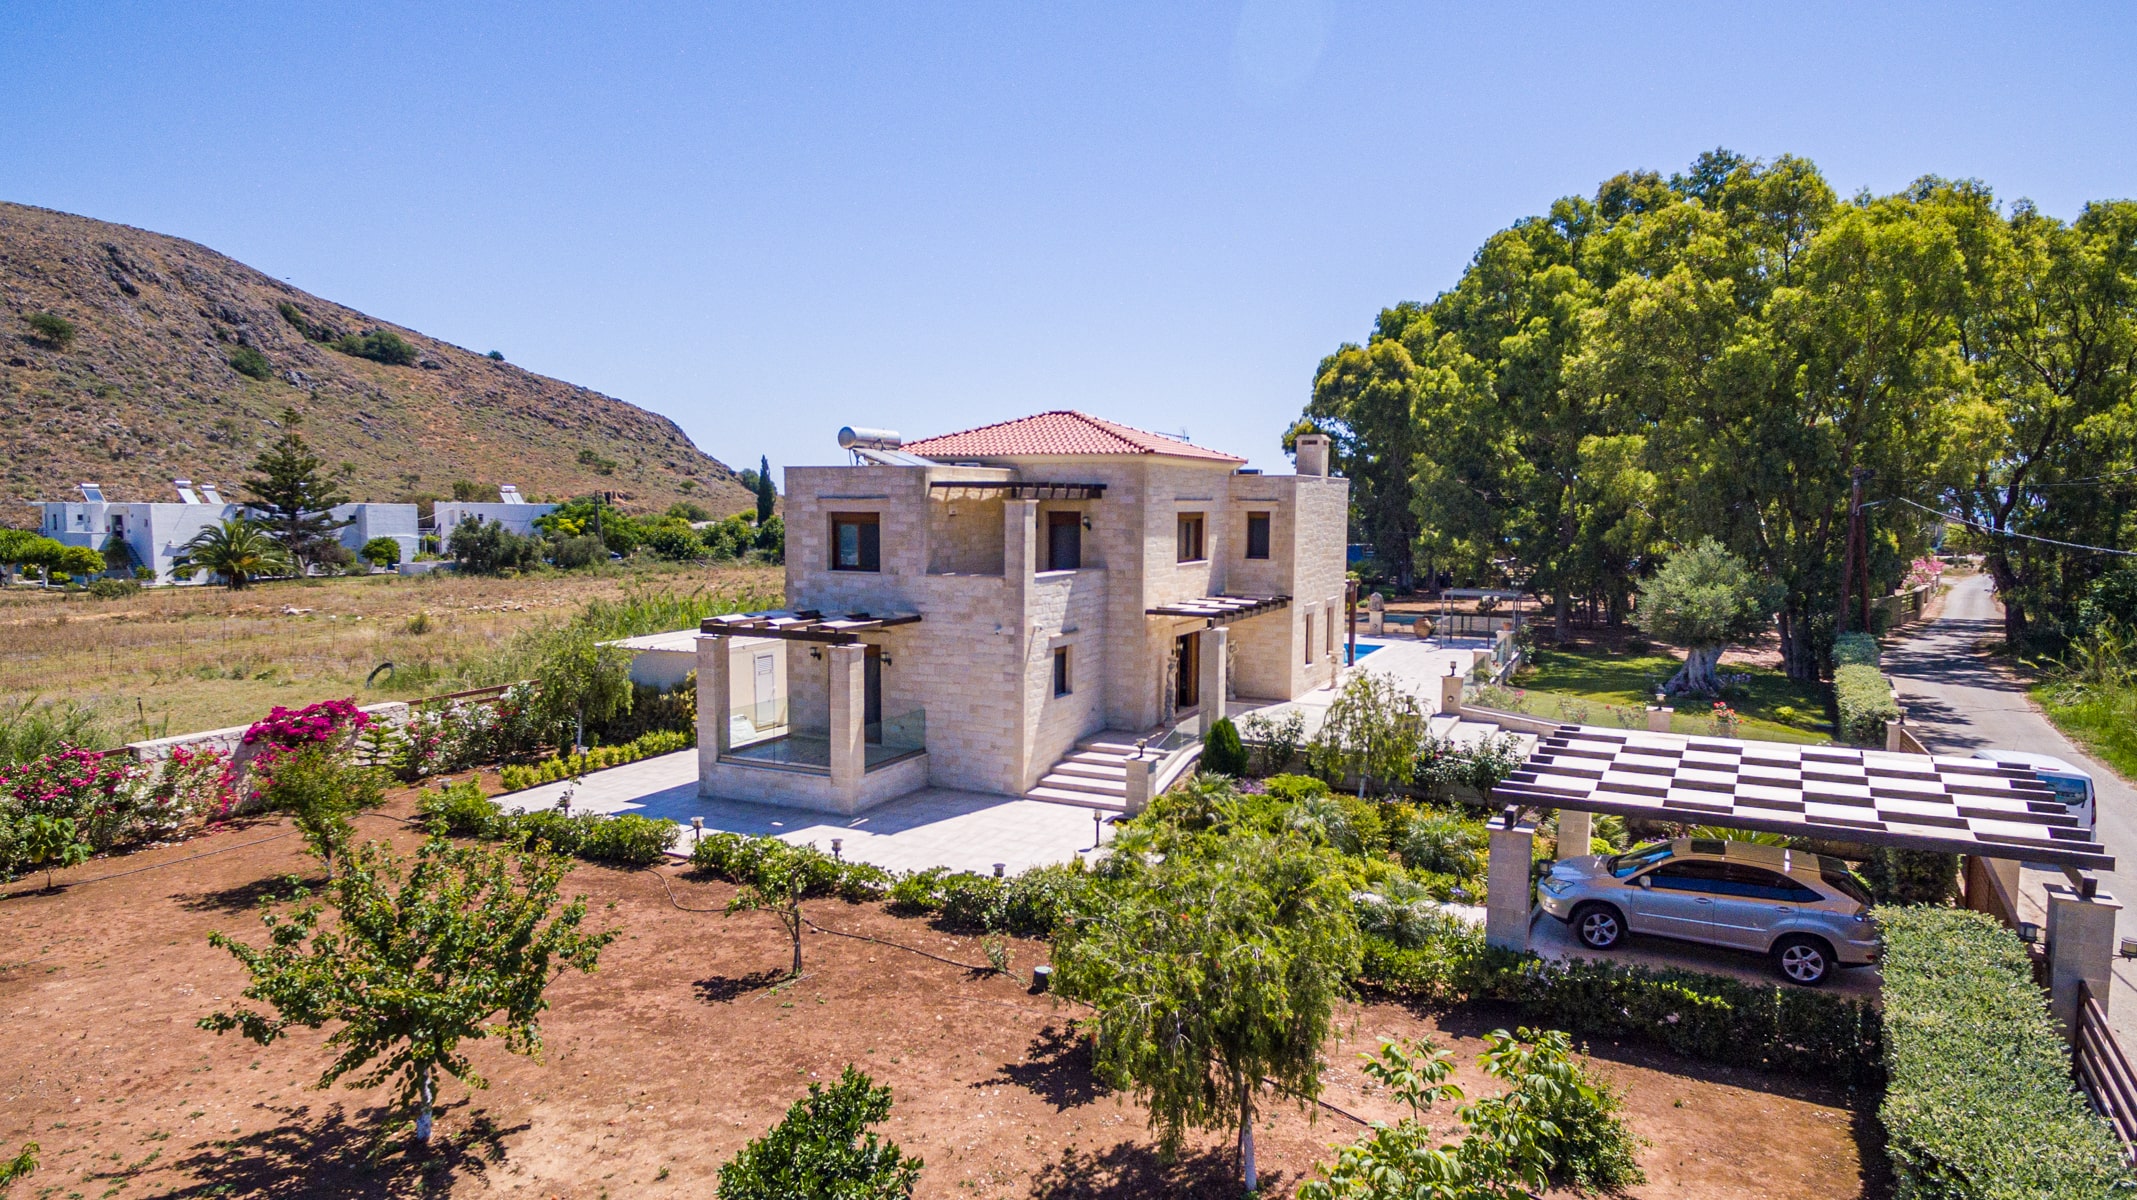 Villa and stone construction in Crete- Kyriakidis Construction Company